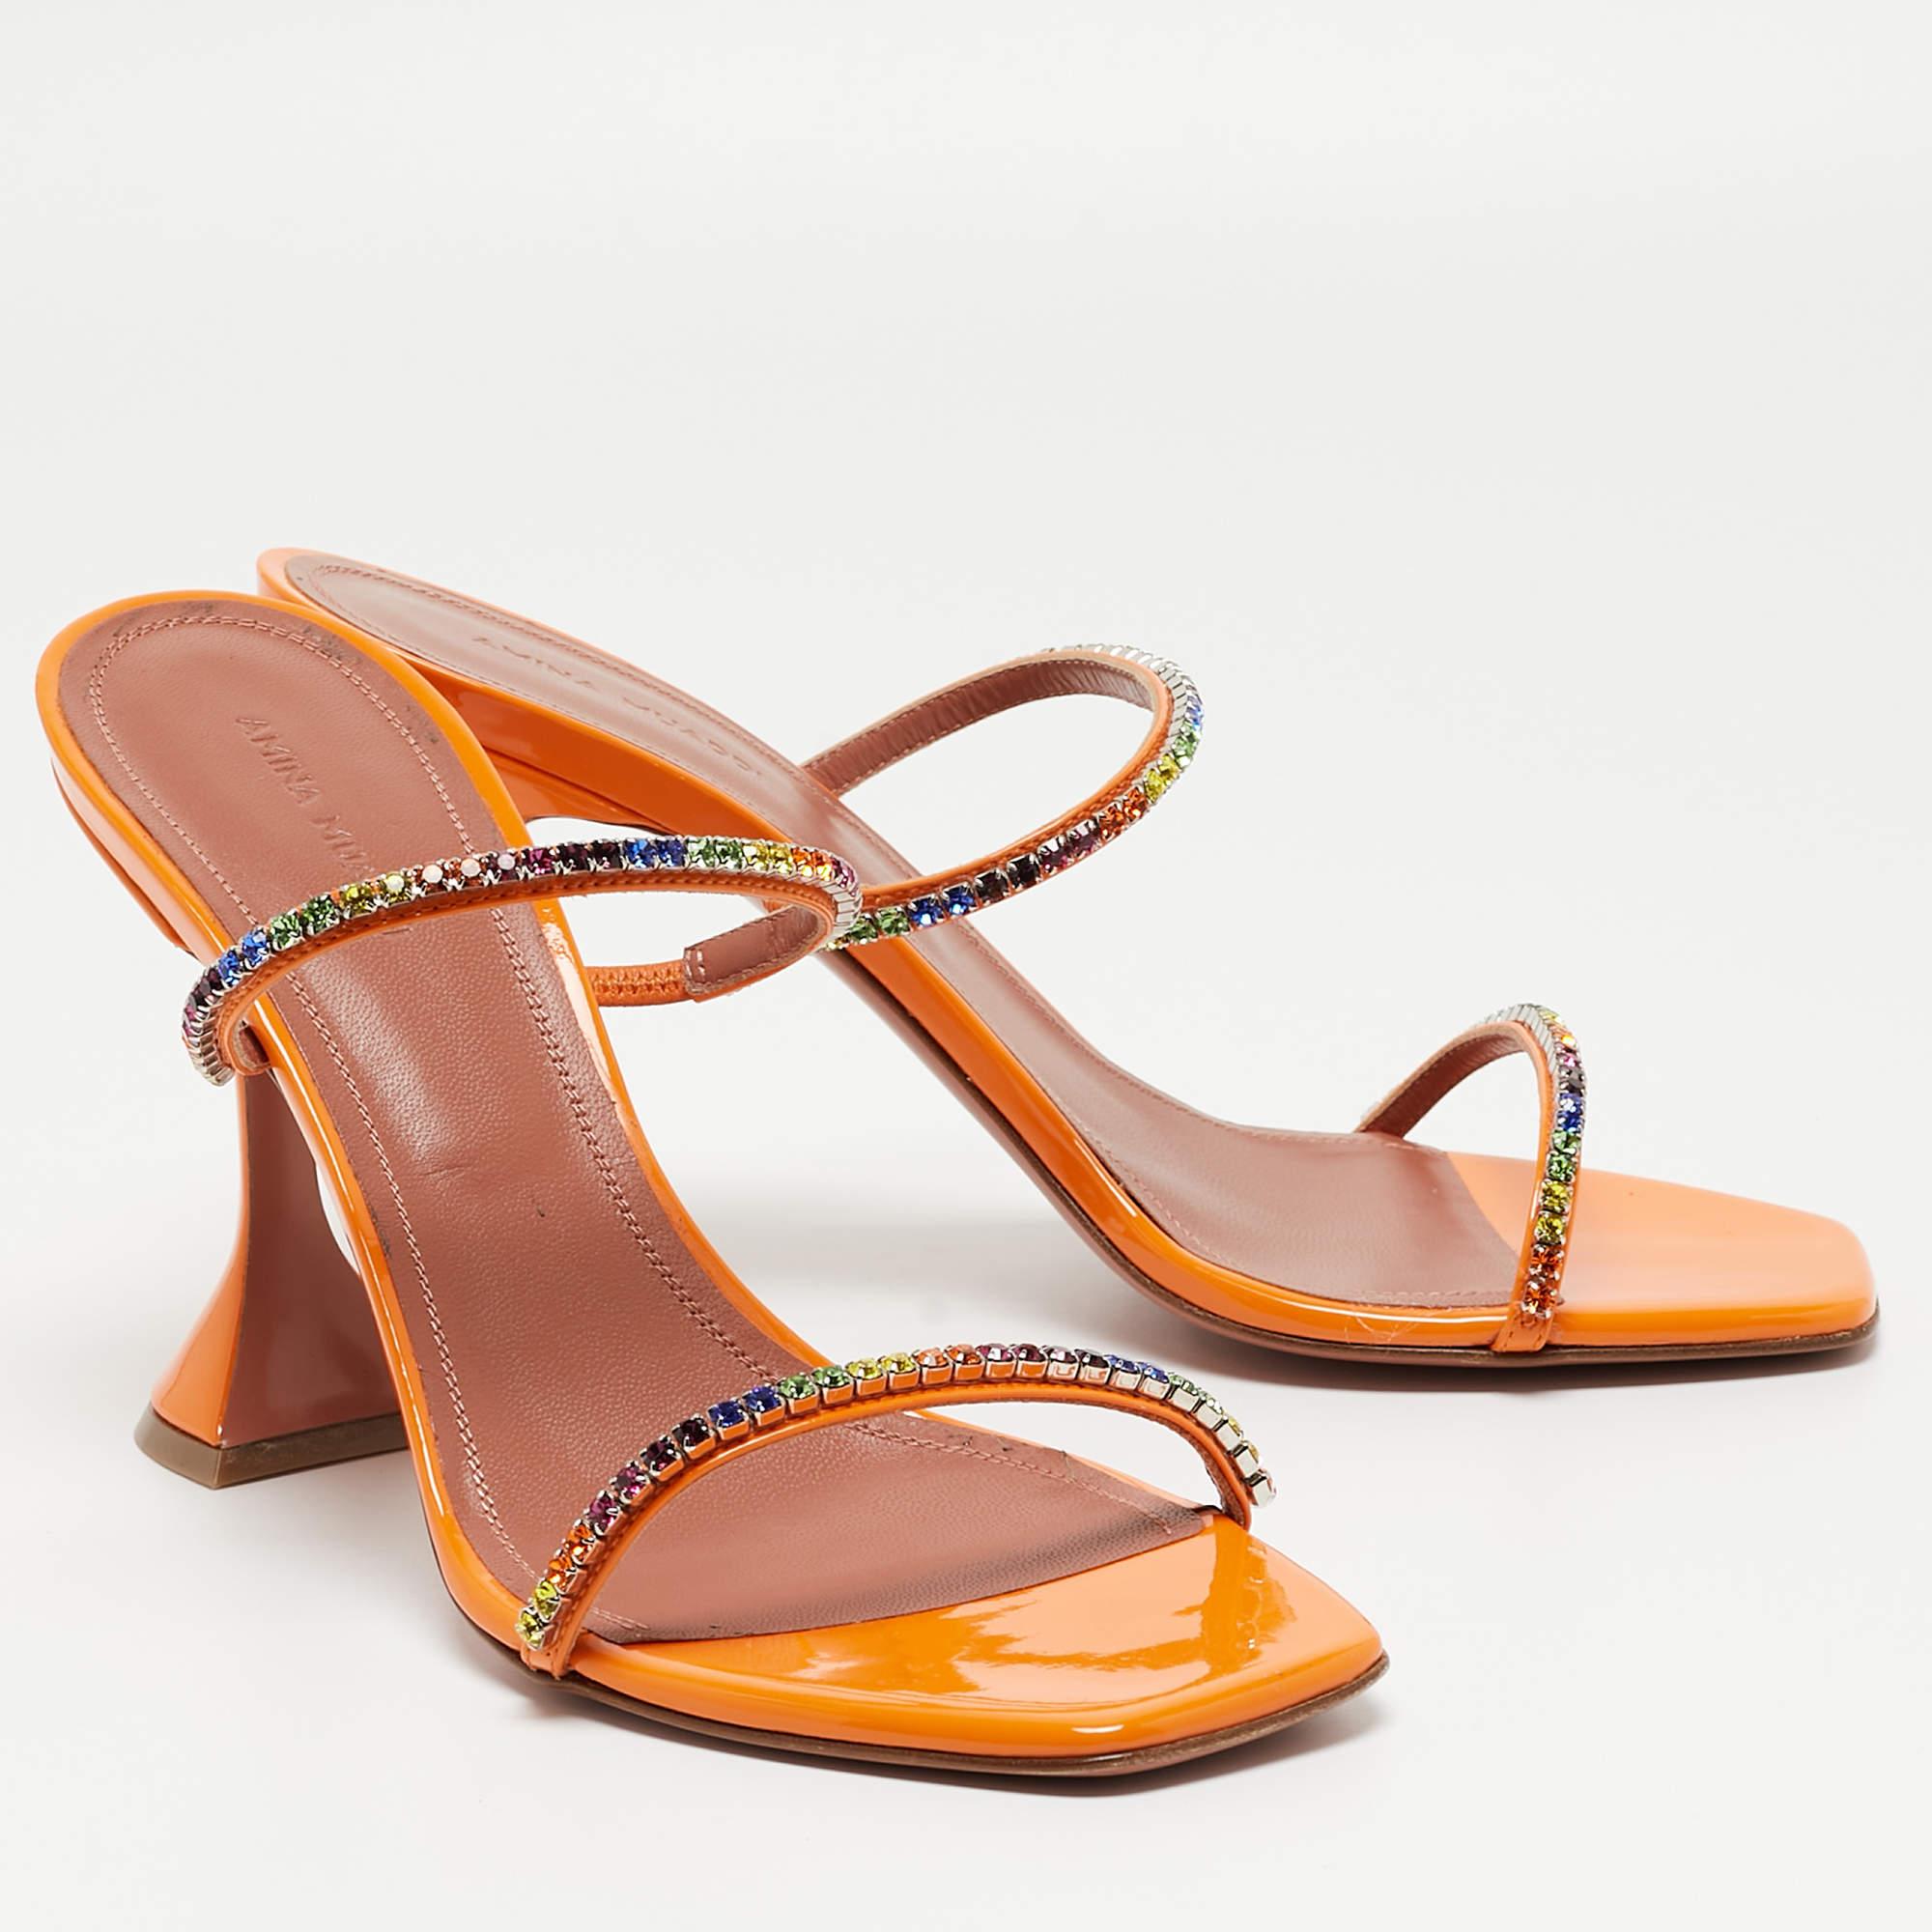  Amina Muaddi Orange Crystal Embellished Satin Glida Slide Sandals Size 40 Pour femmes 